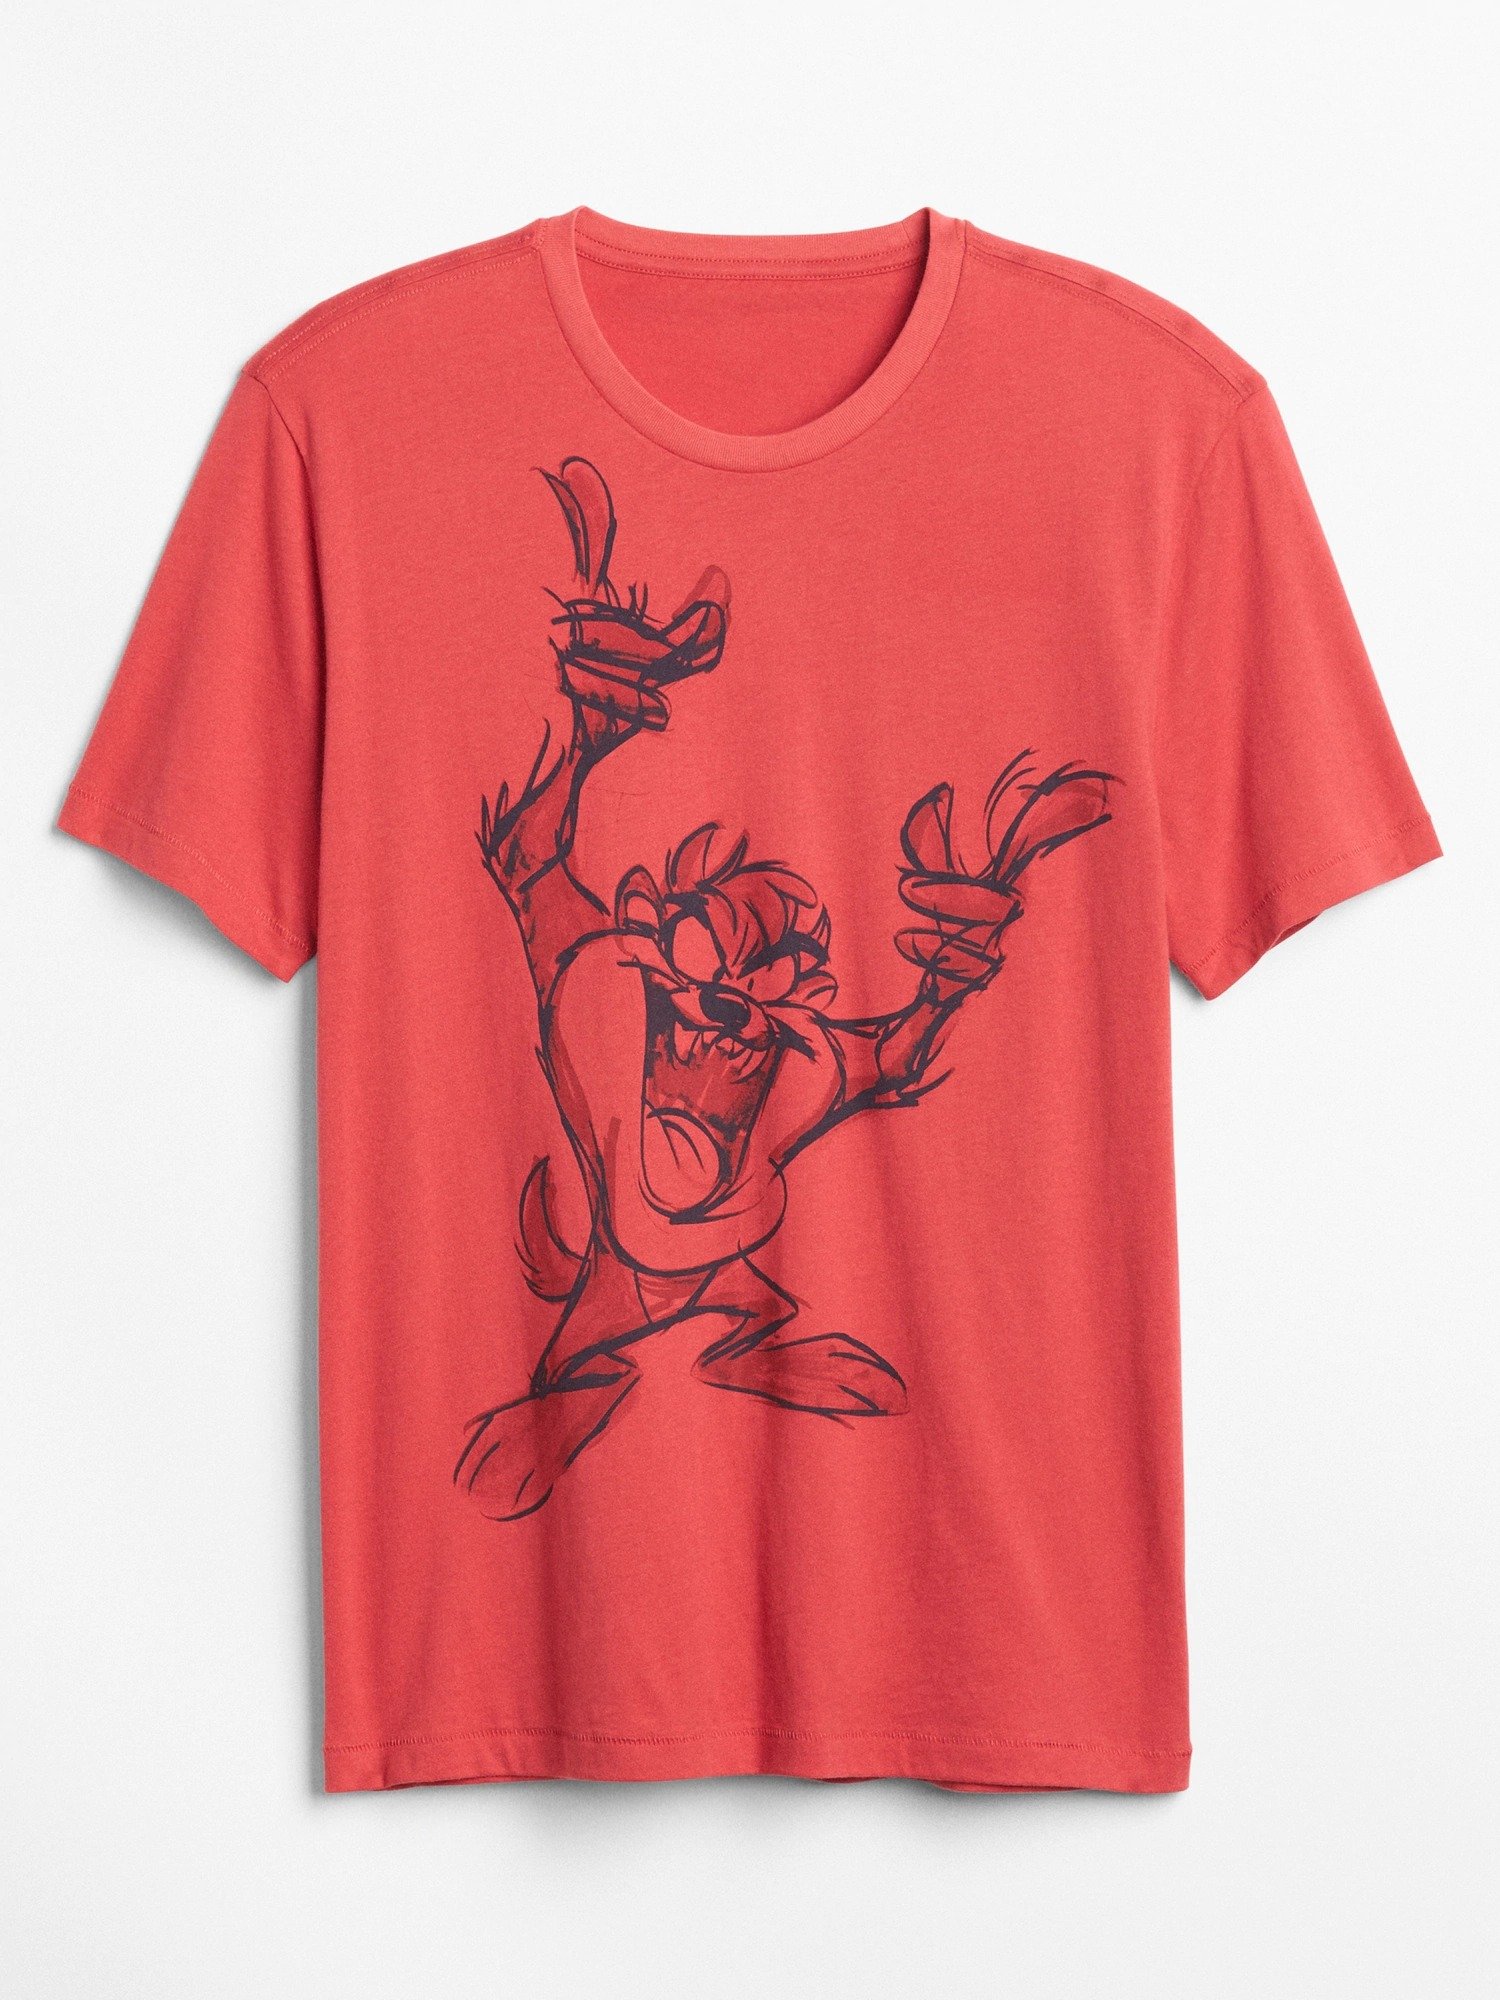 Gap | Looney Toons baskılı kısa kollu t-shirt product image